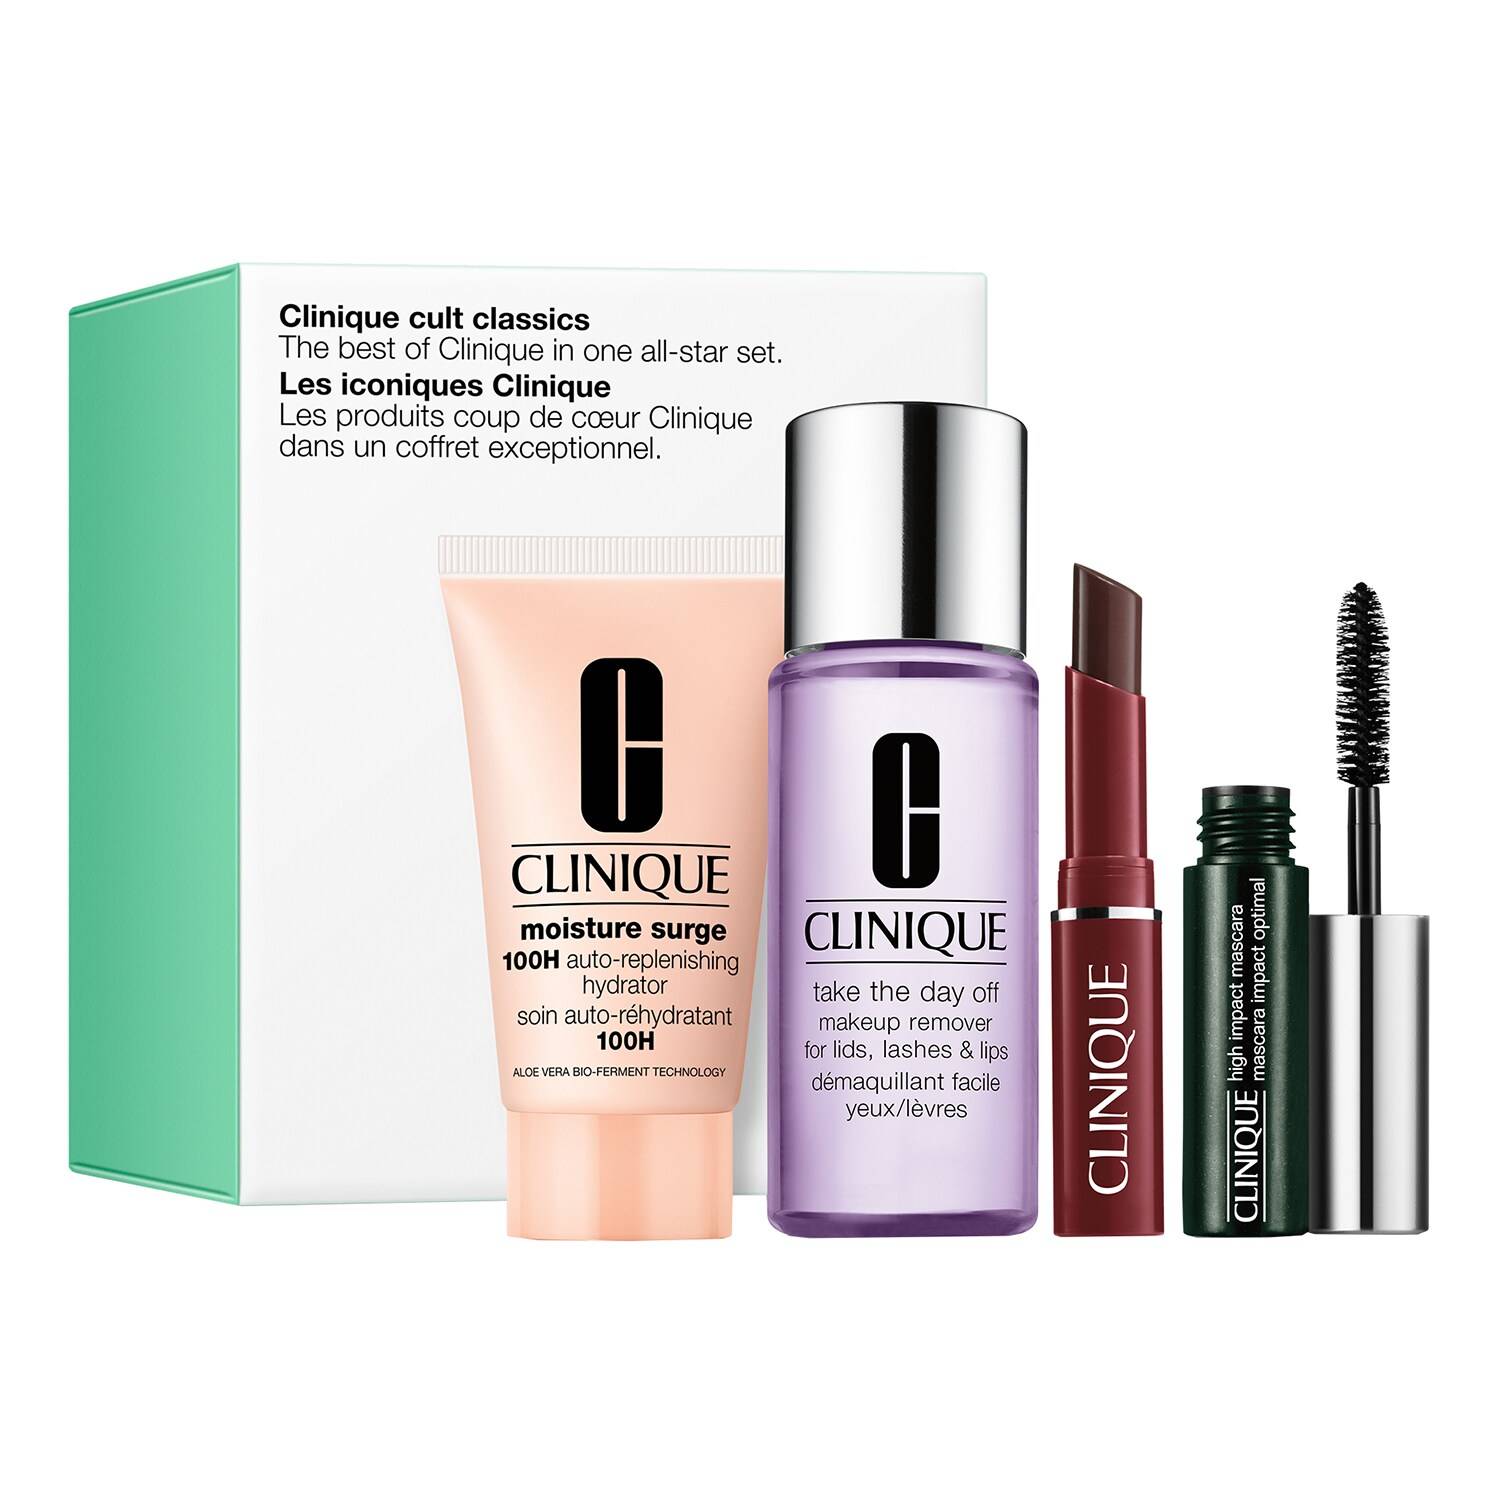 Clinique Cult Classics Skincare And Makeup Gift Set